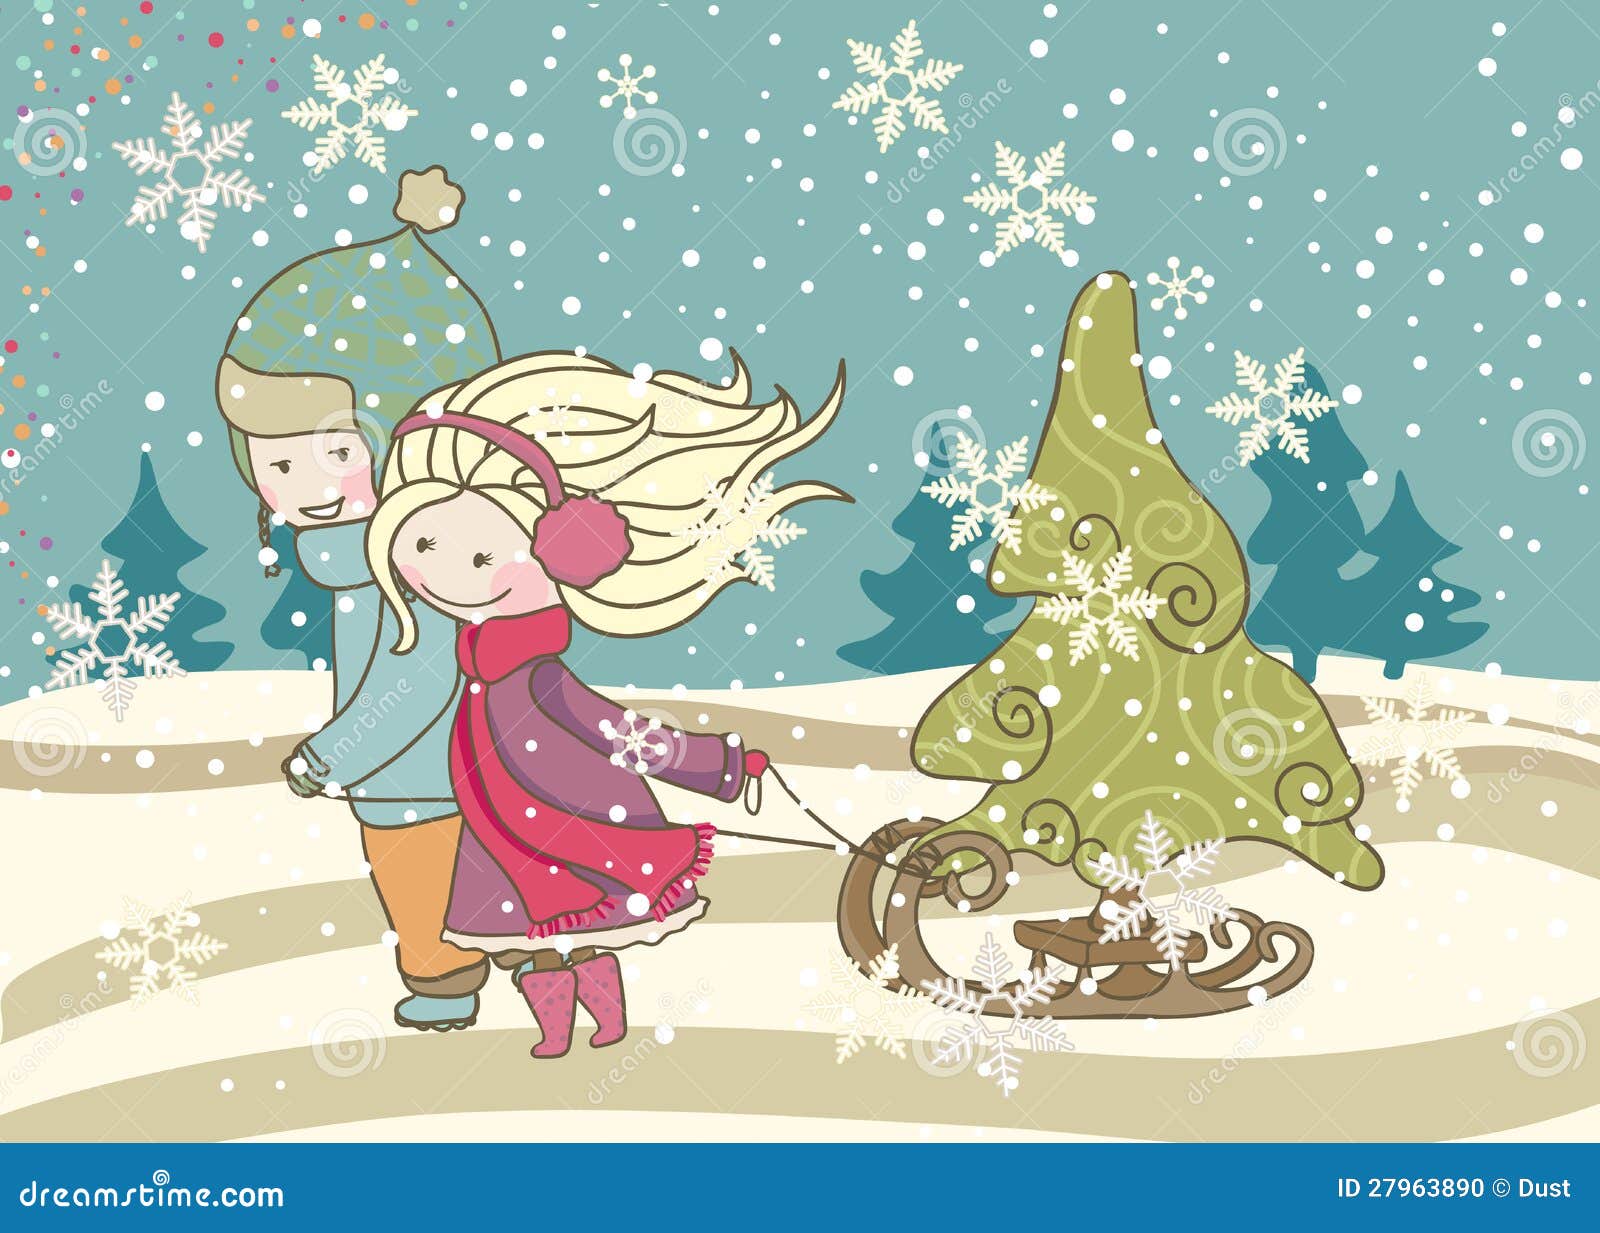 Kids Pulling Sled With Christmas Tree Stock Photo - Image 